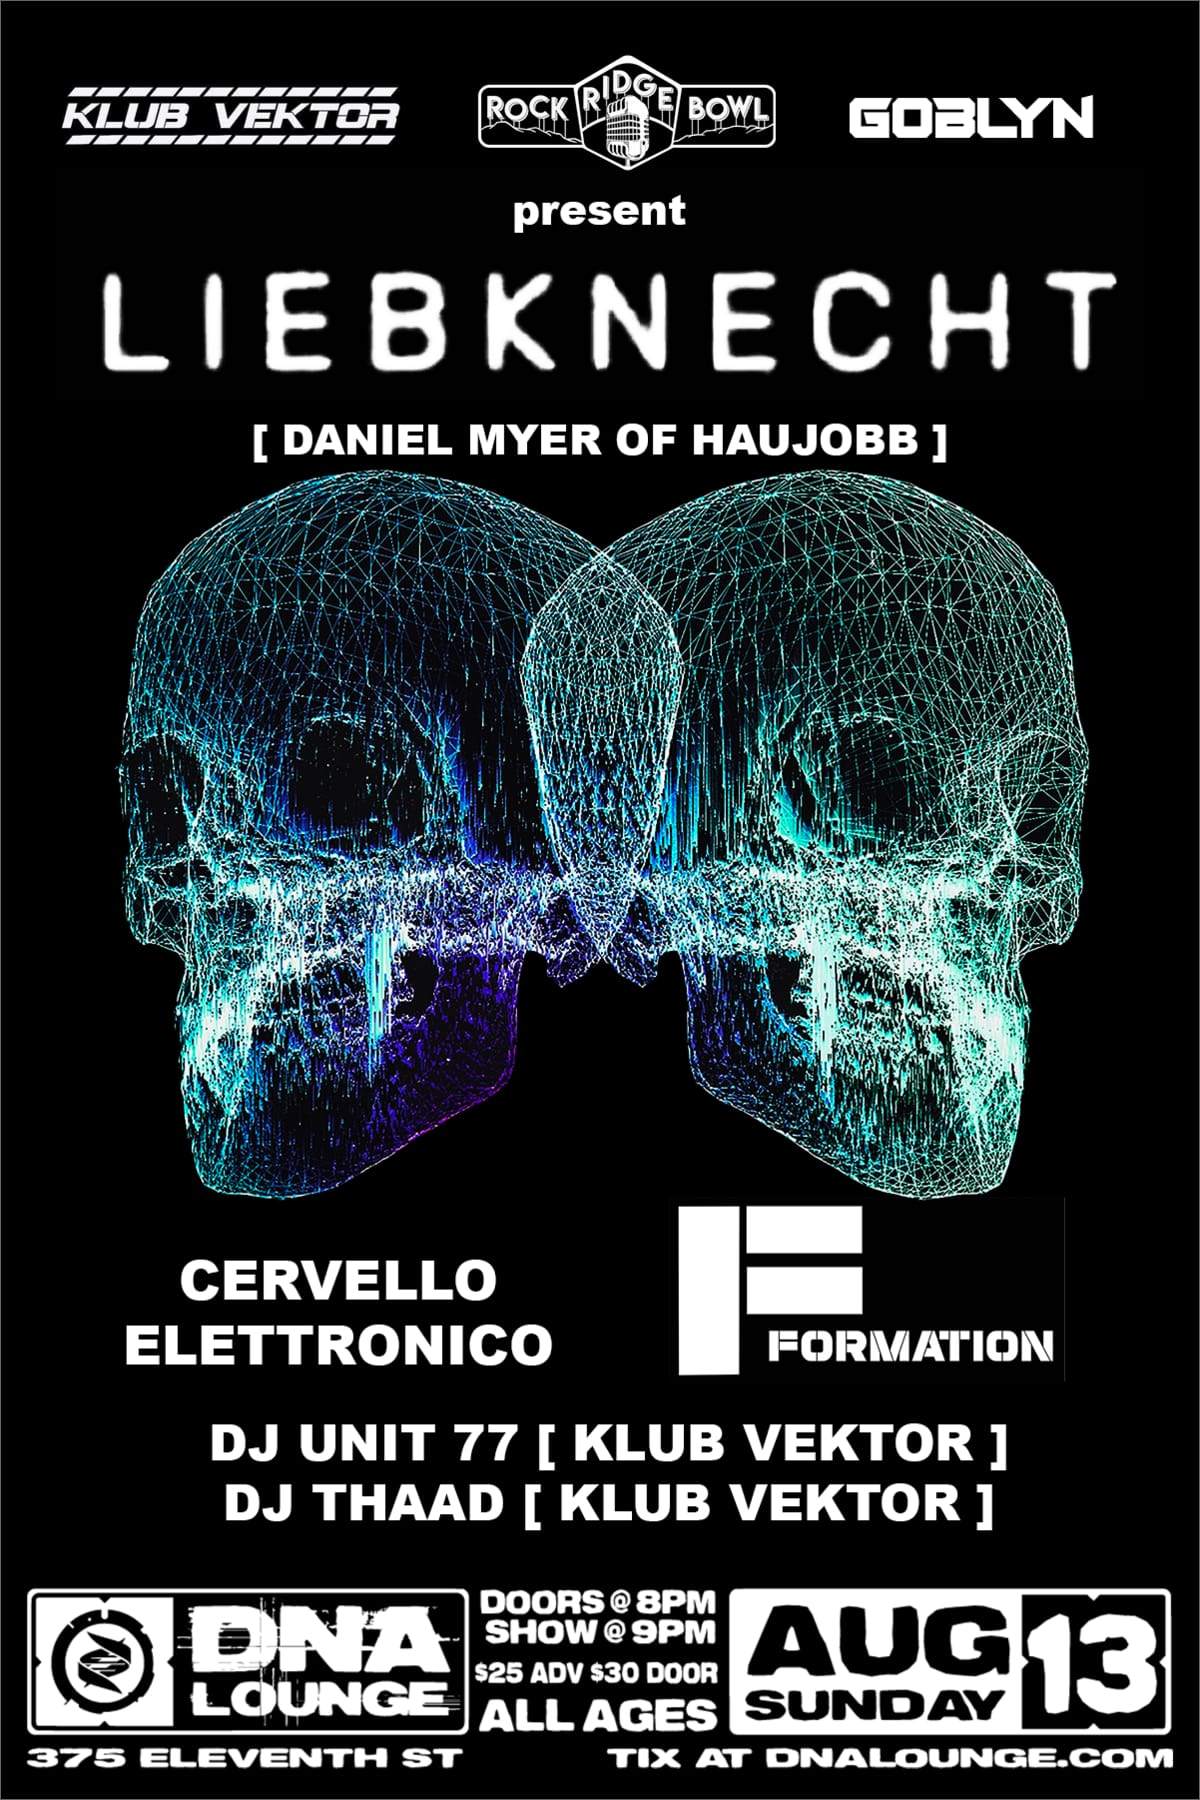 Klub Vektor, Rockridge Bowl & Goblyn present Liebknecht + Cervello Elettronico + FORMATION - Página frontal